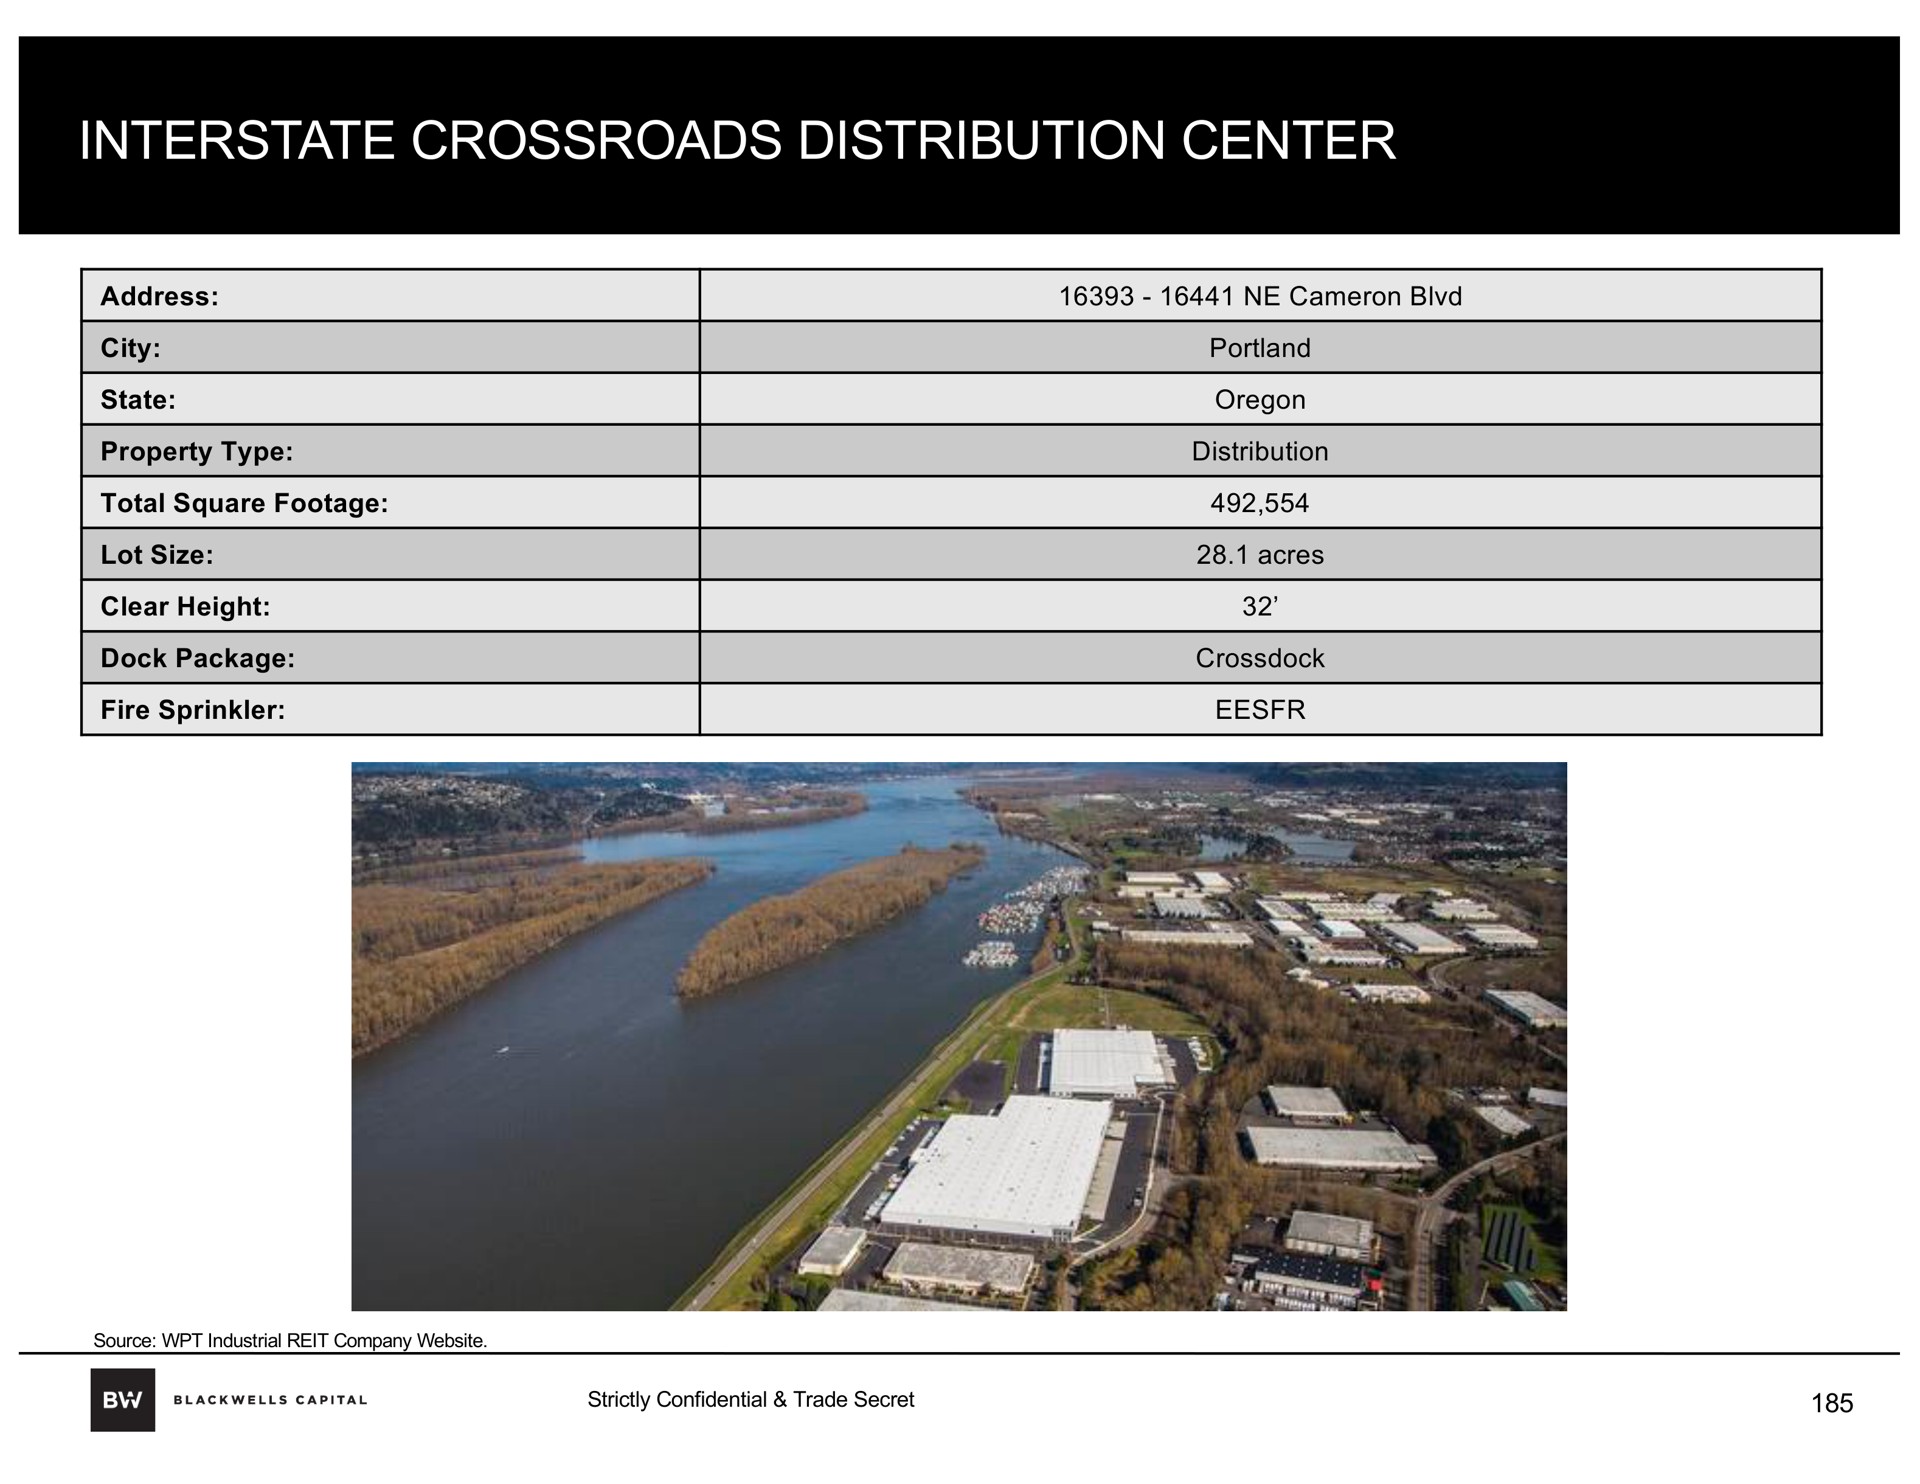 interstate crossroads distribution center a | Blackwells Capital